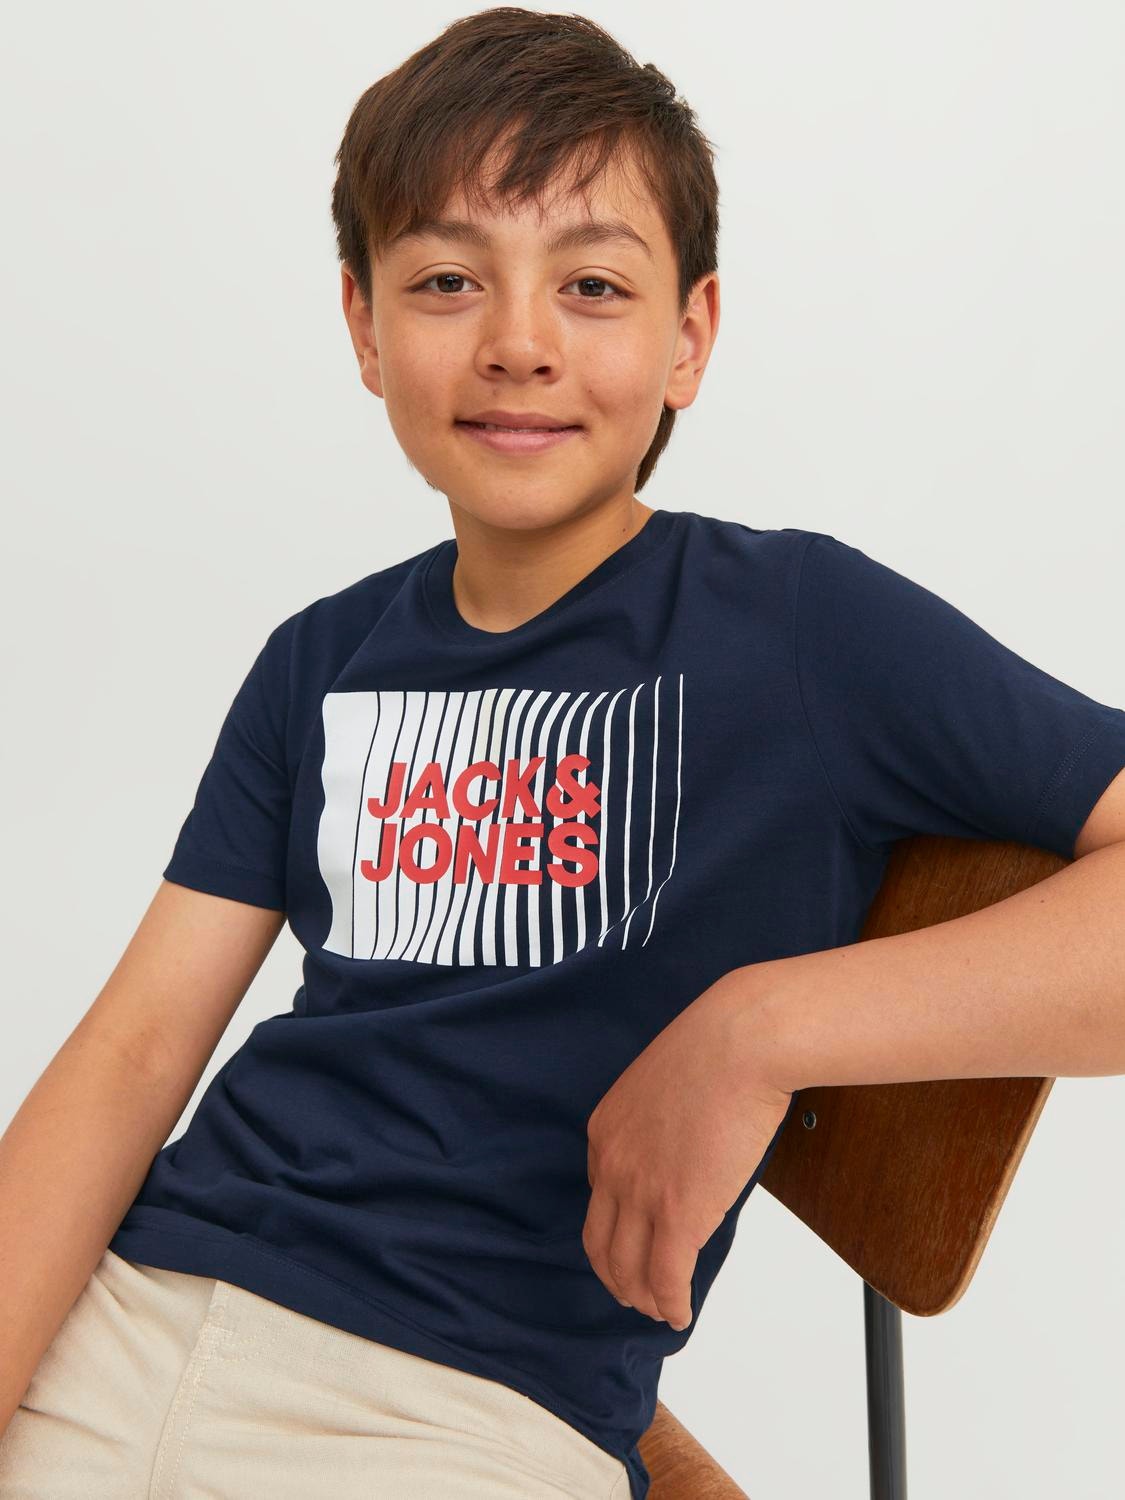 Jack & Jones Bedrukt T-shirt Mini -Navy Blazer - 12257365